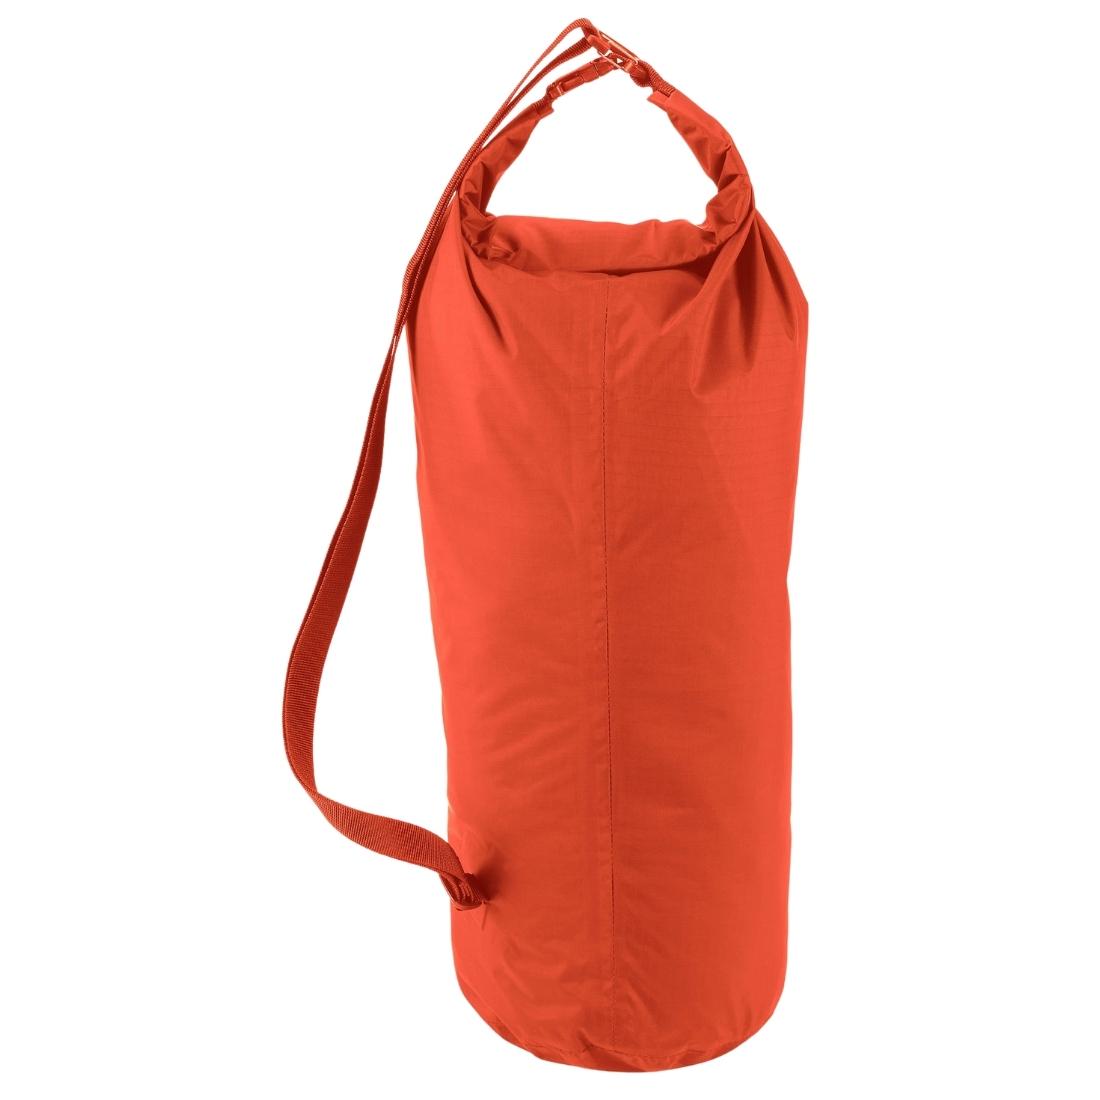 Dakine Packable Rolltop Dry Bag 20L - Sun Flare - Wet/Dry Bag by Dakine 20L